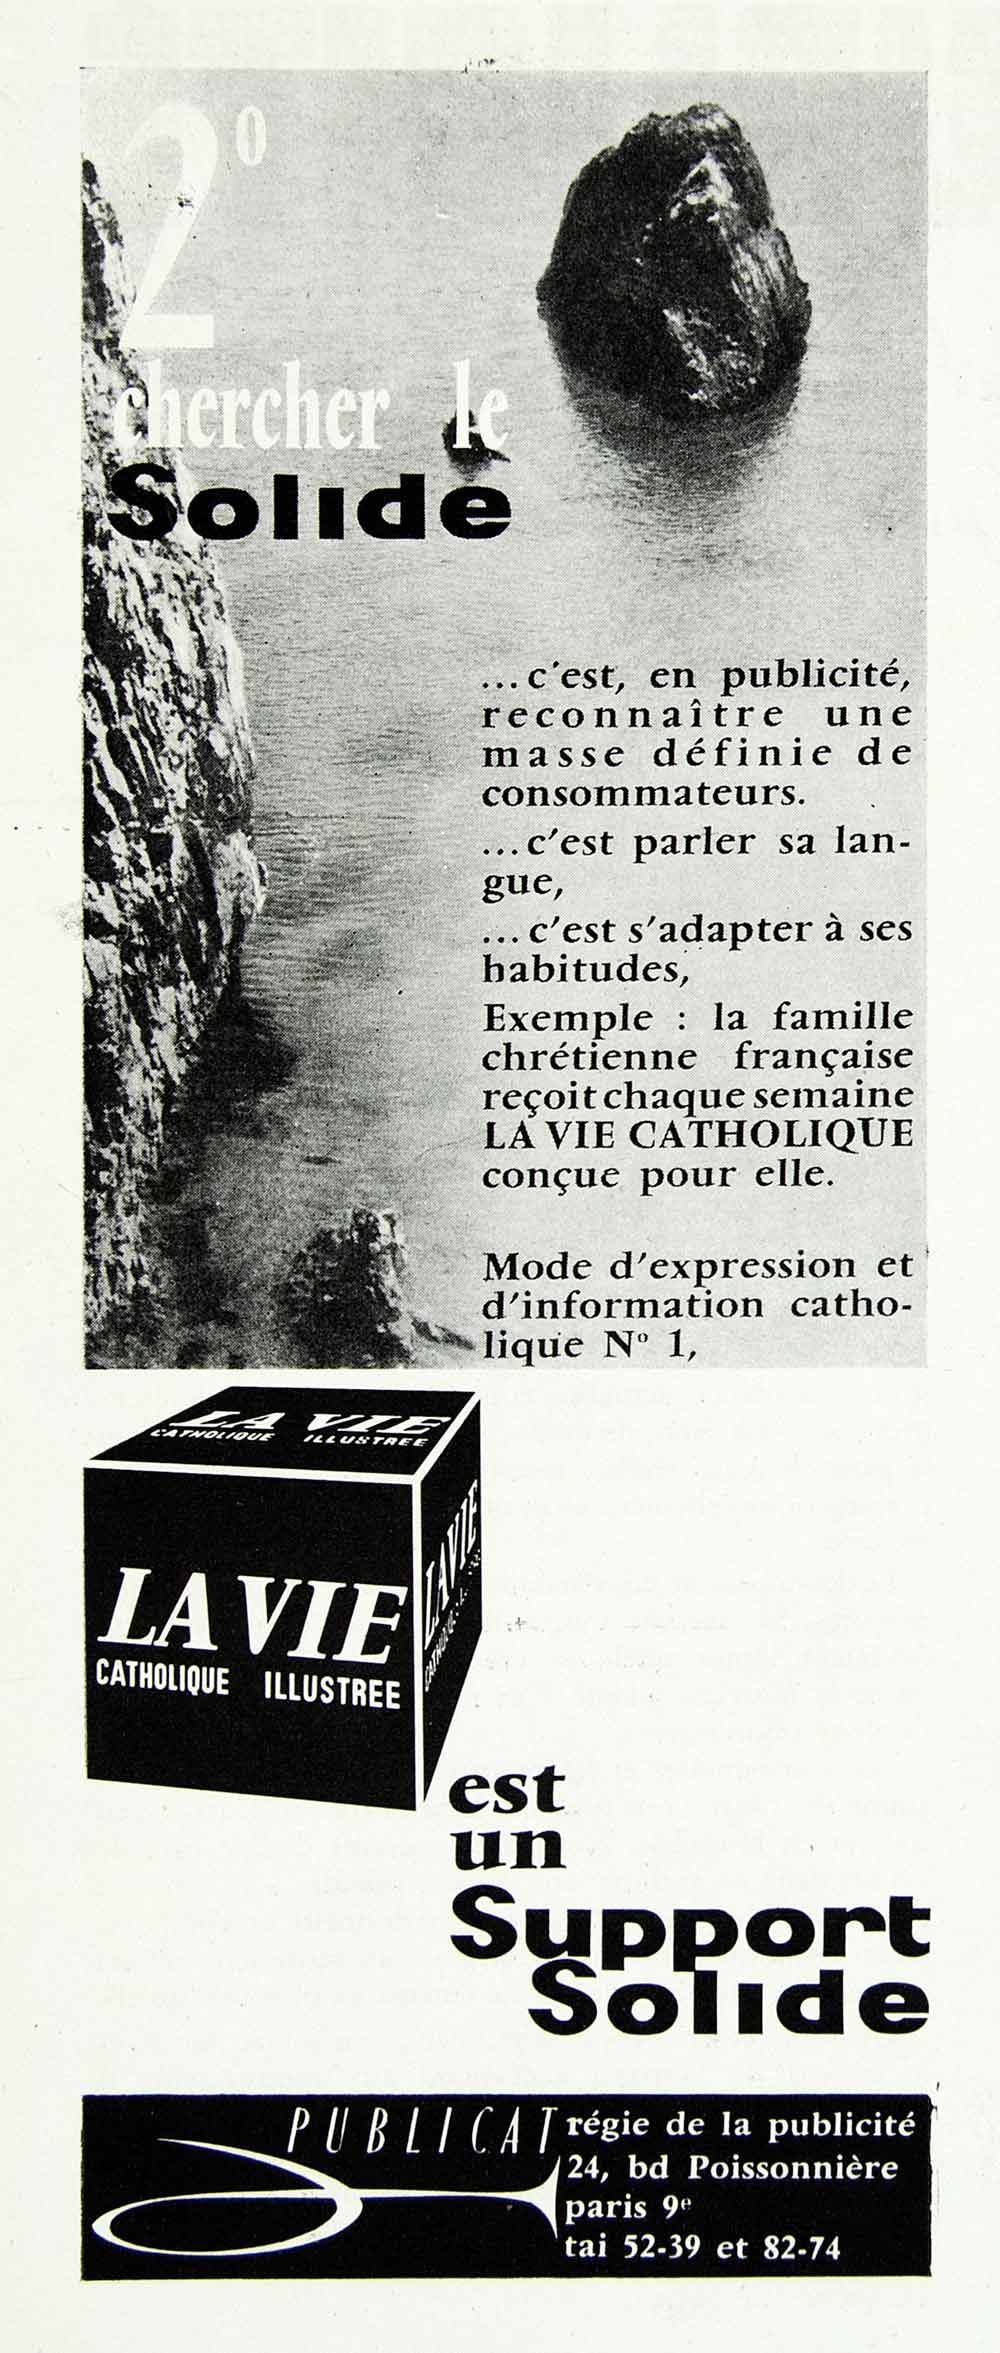 1957 Ad La Vie Catholique Illustree Publicat French Religious Sea Rock VEN1